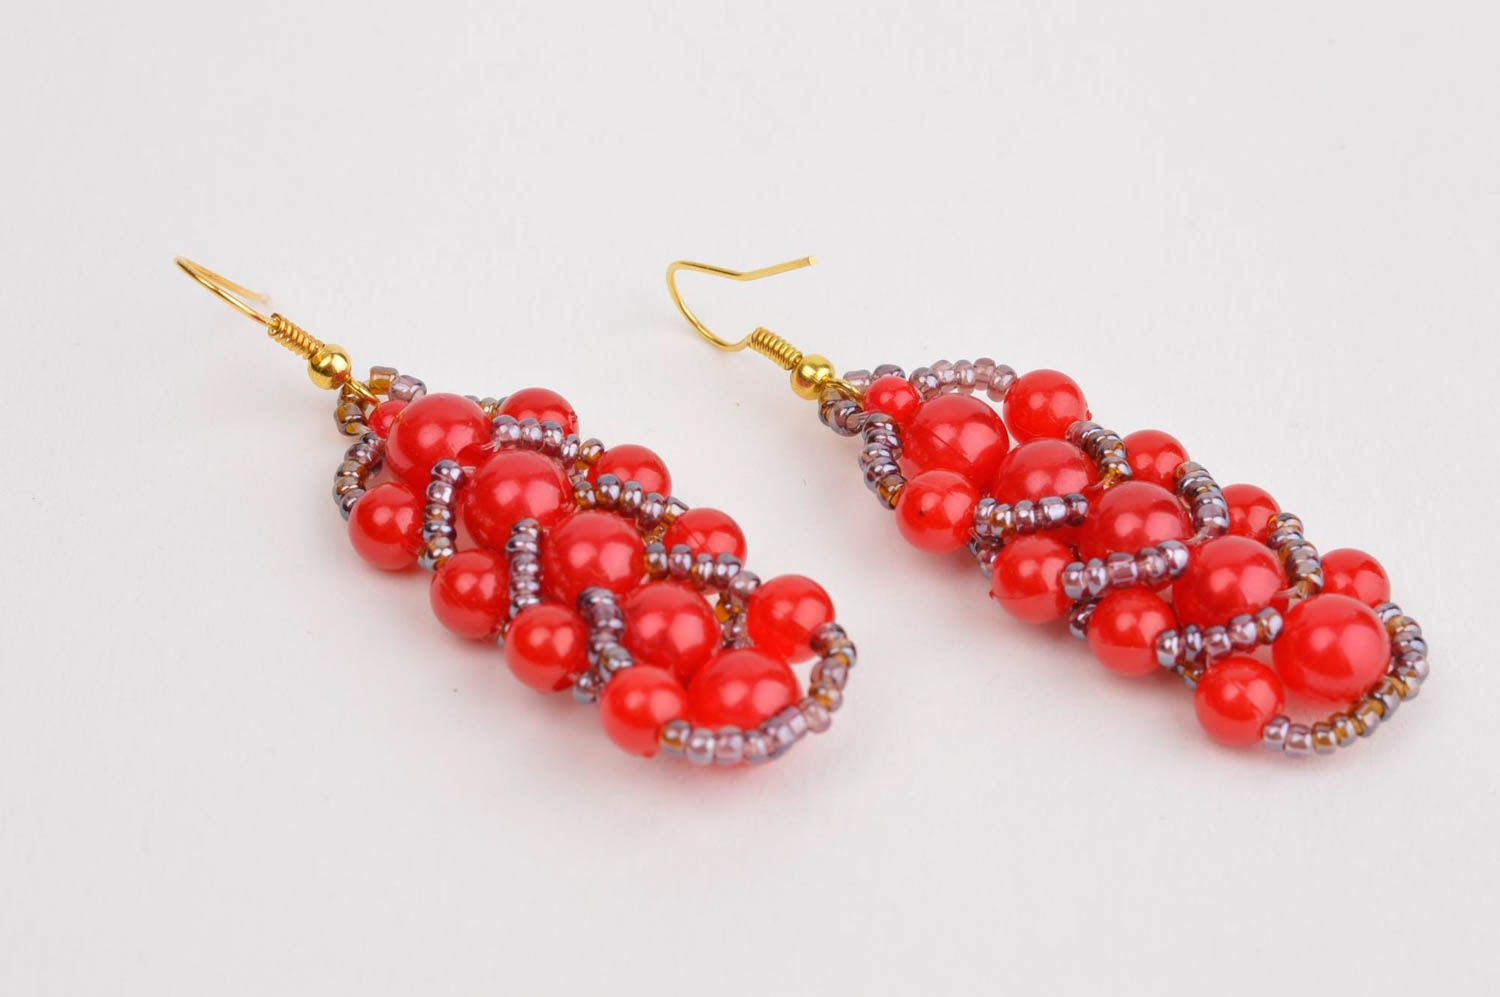 Beaded earrings handmade woven earrings with charms designer fashion bijouterie photo 3